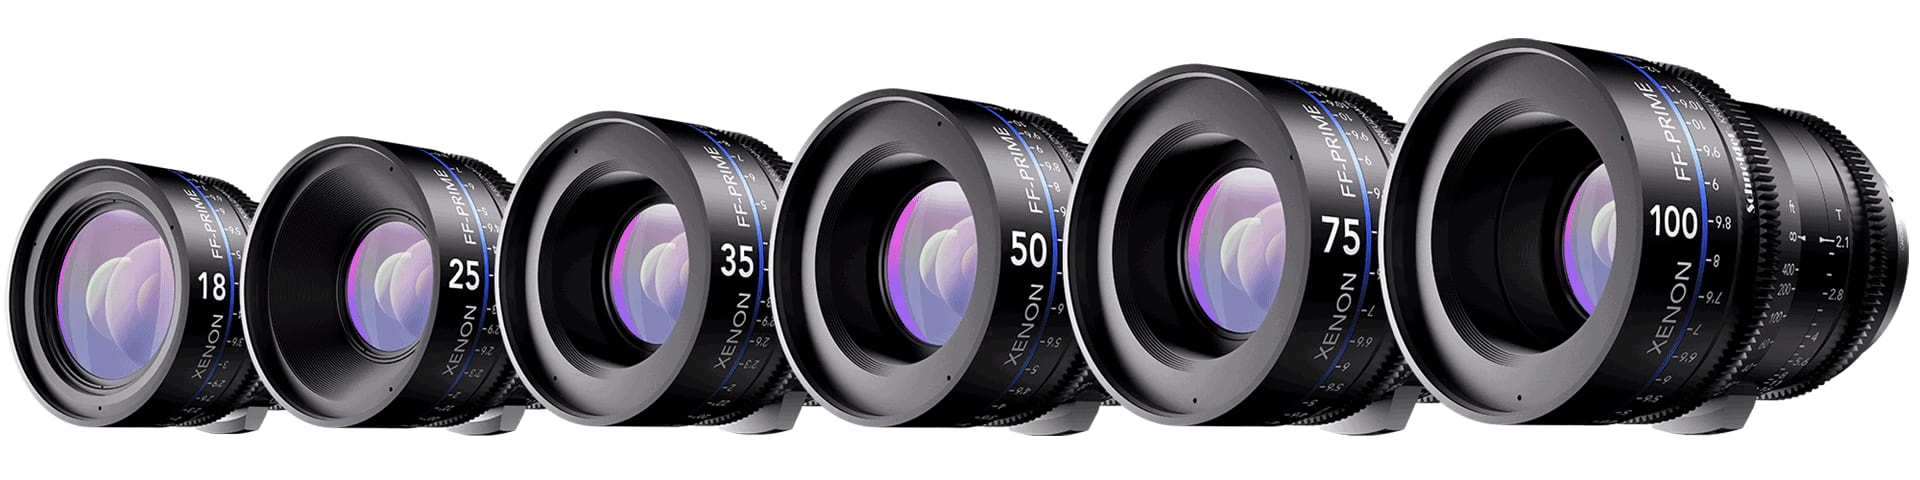 Collage Schneider-Kreuznach Xenon FF Prime Cine Lenses focal lengths 18 to 100 mm.jpg